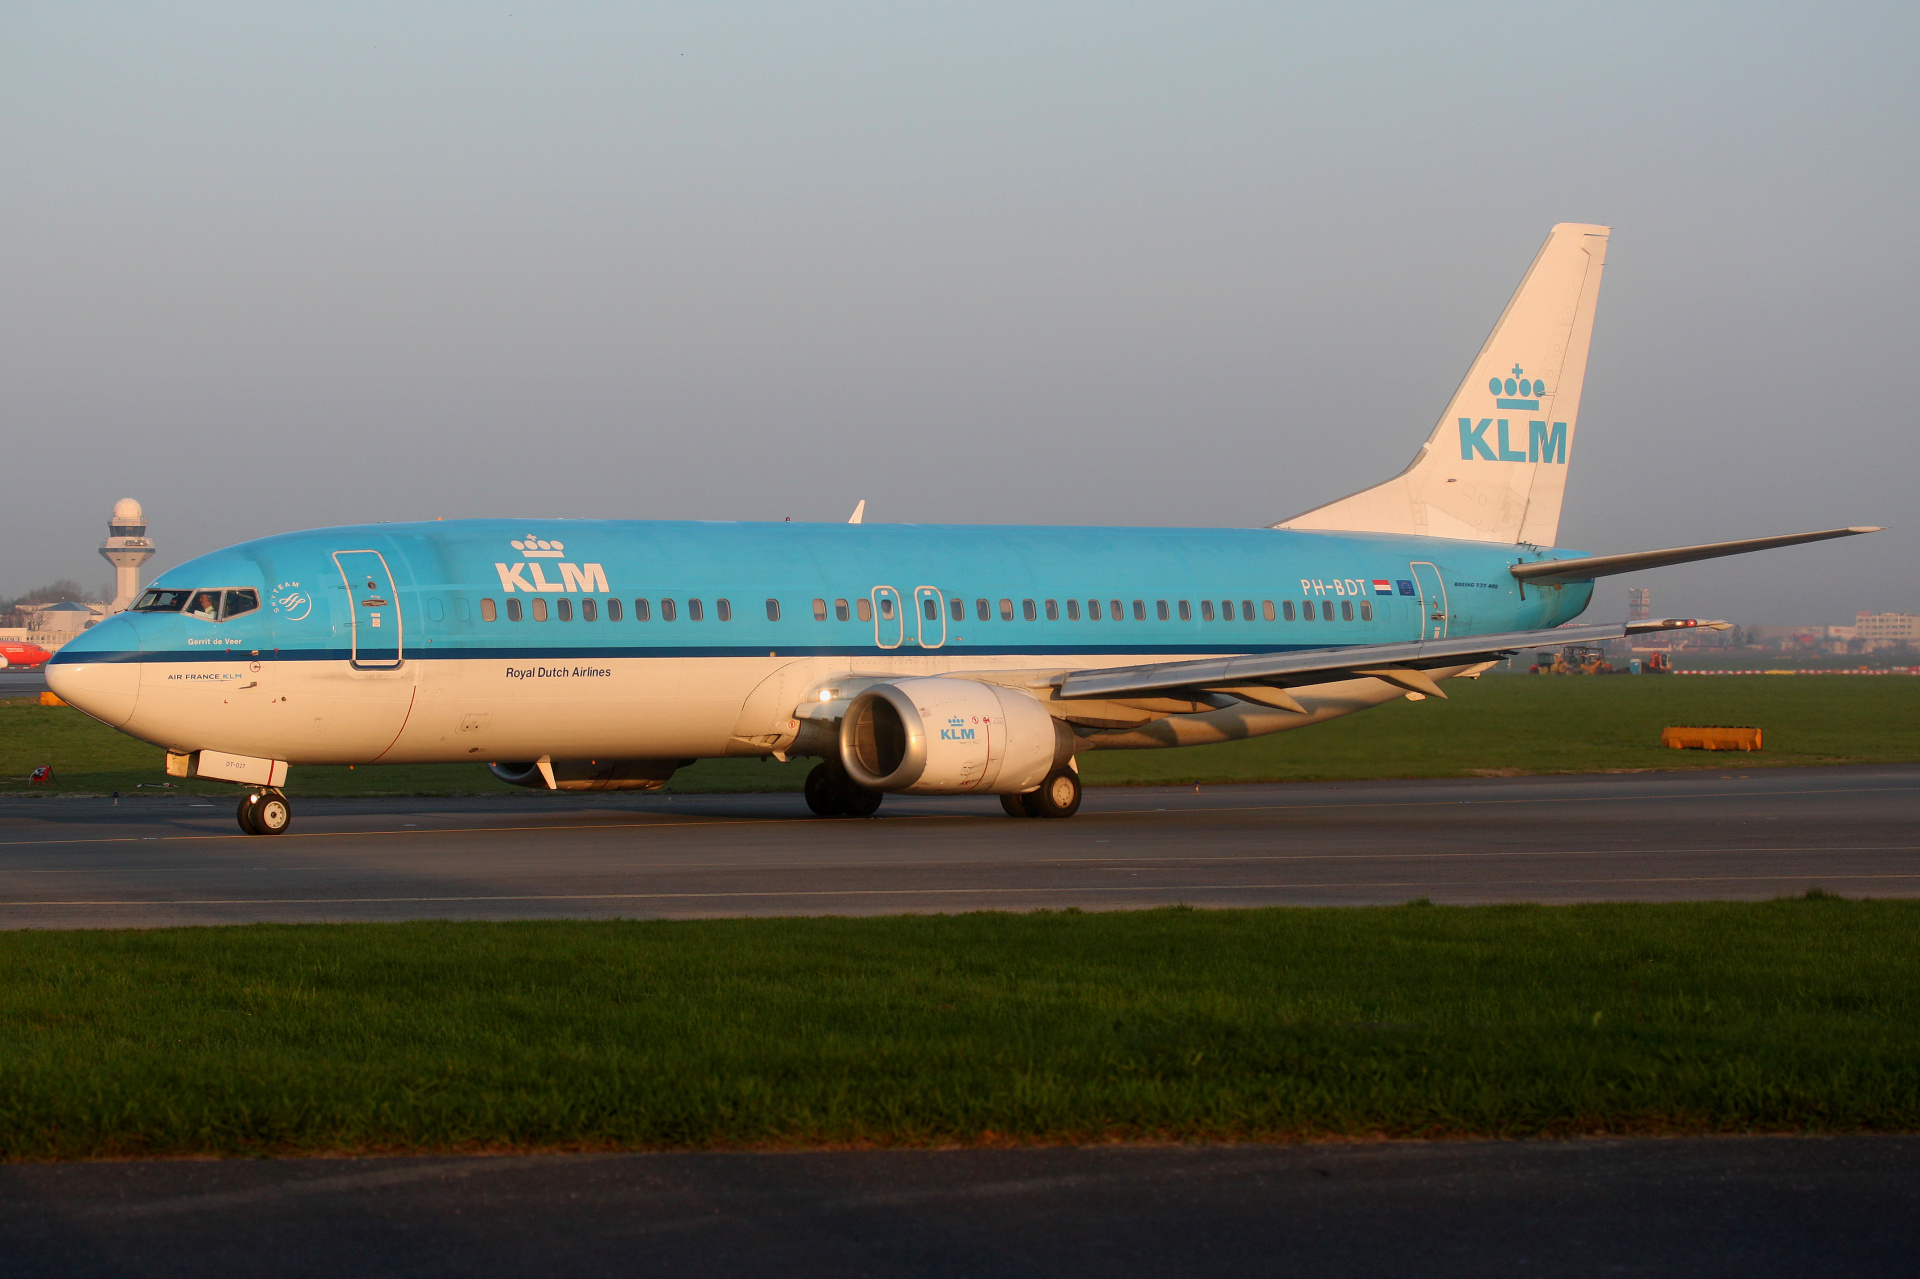 PH-BDT, KLM Royal Dutch Airlines (Aircraft » EPWA Spotting » Boeing 737-400)